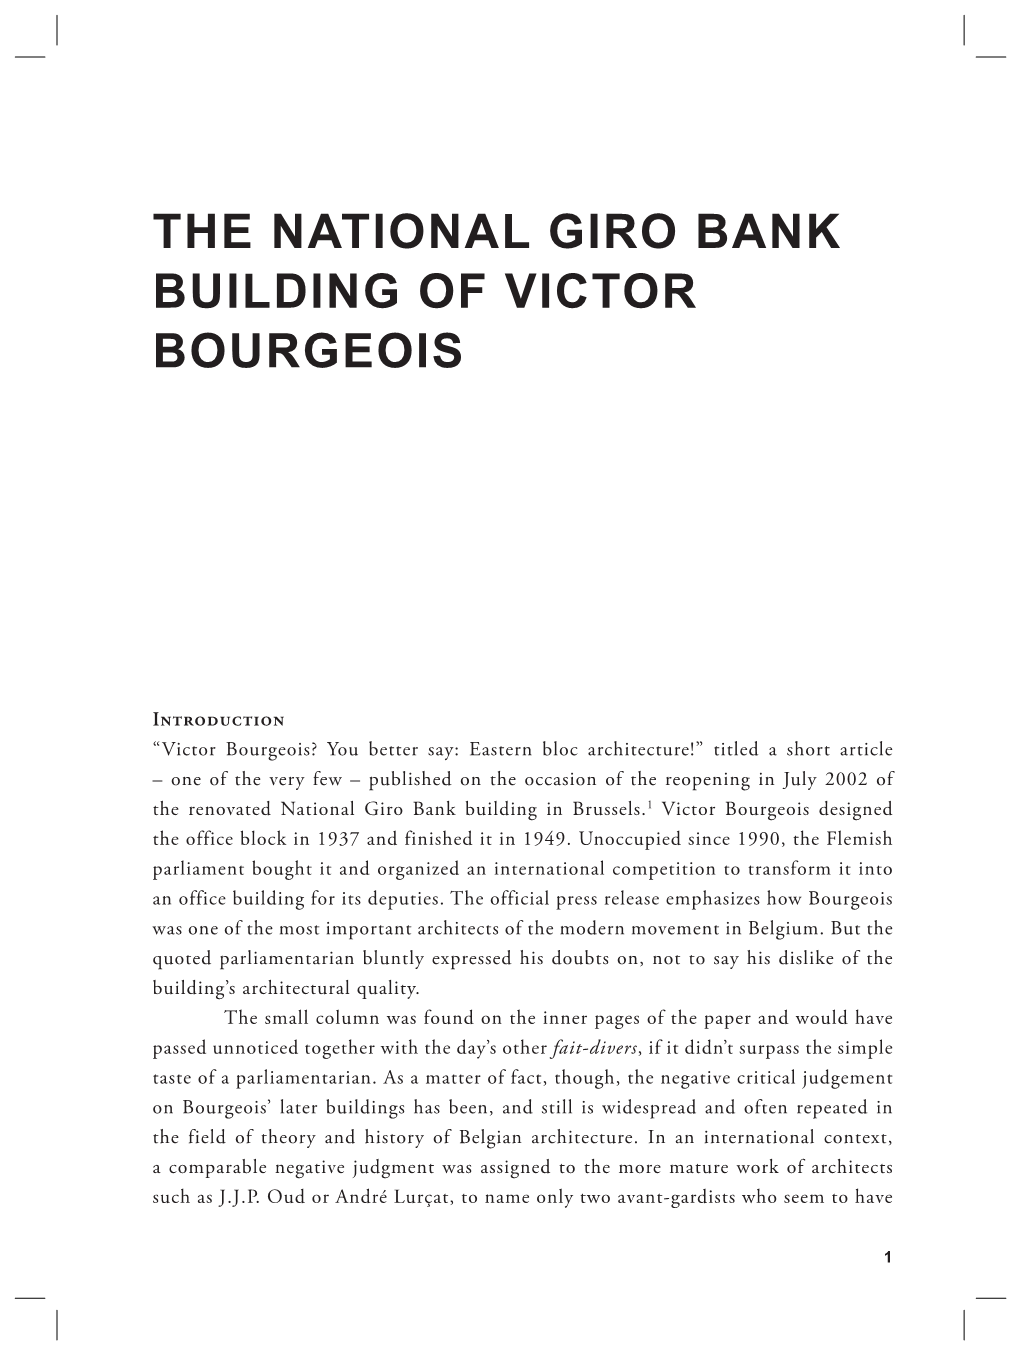 The National Giro Bank Building of Victor Bourgeois